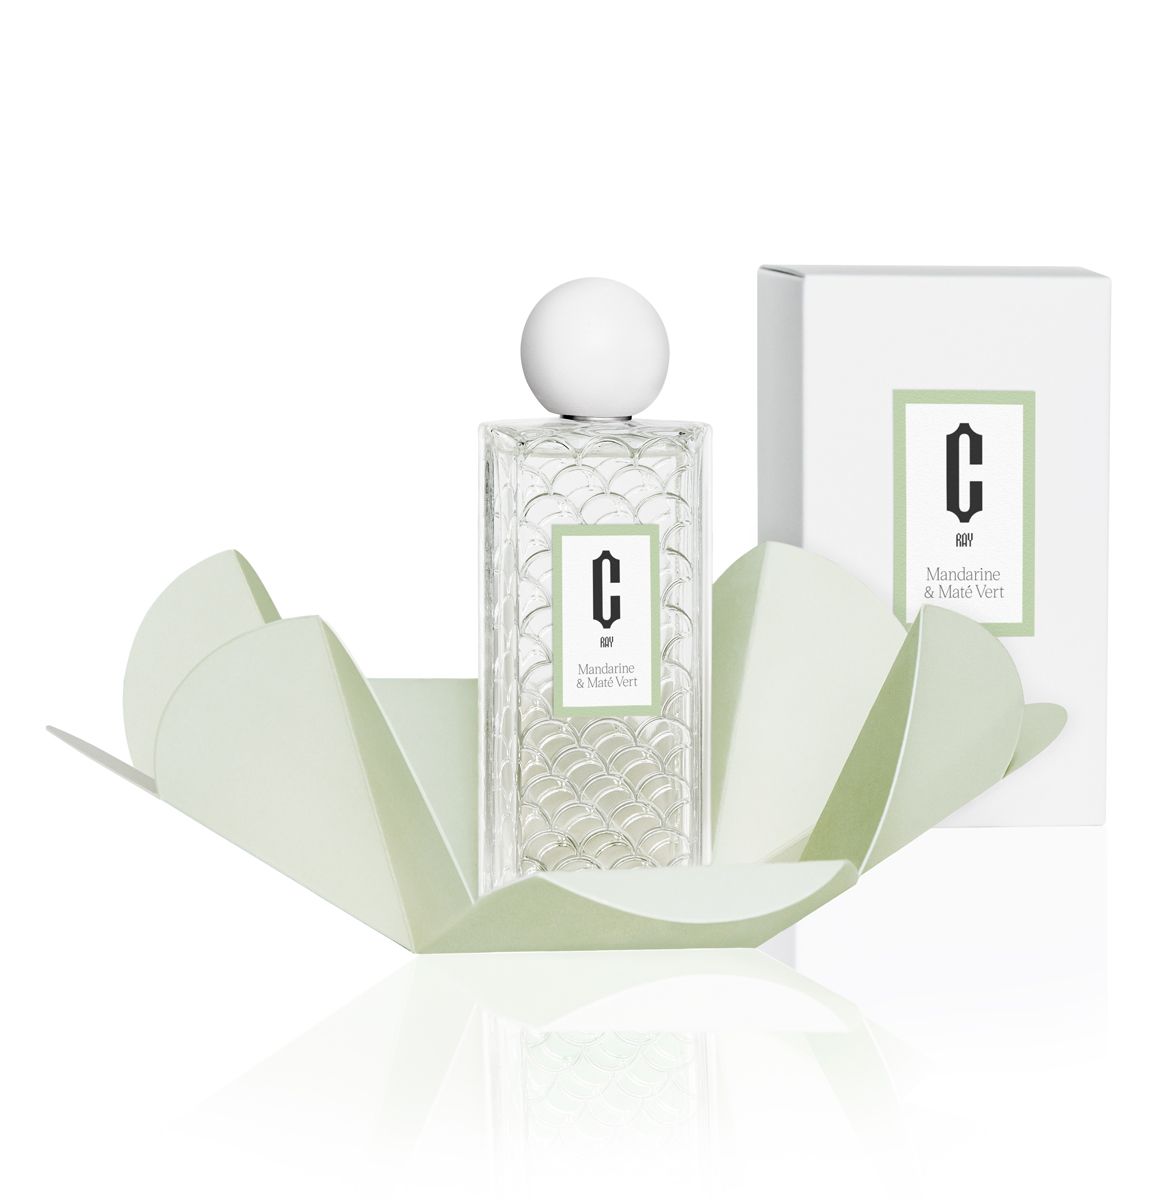 Mandarine & Maté Vert Carlotha Ray perfume - a fragrance for women 2021